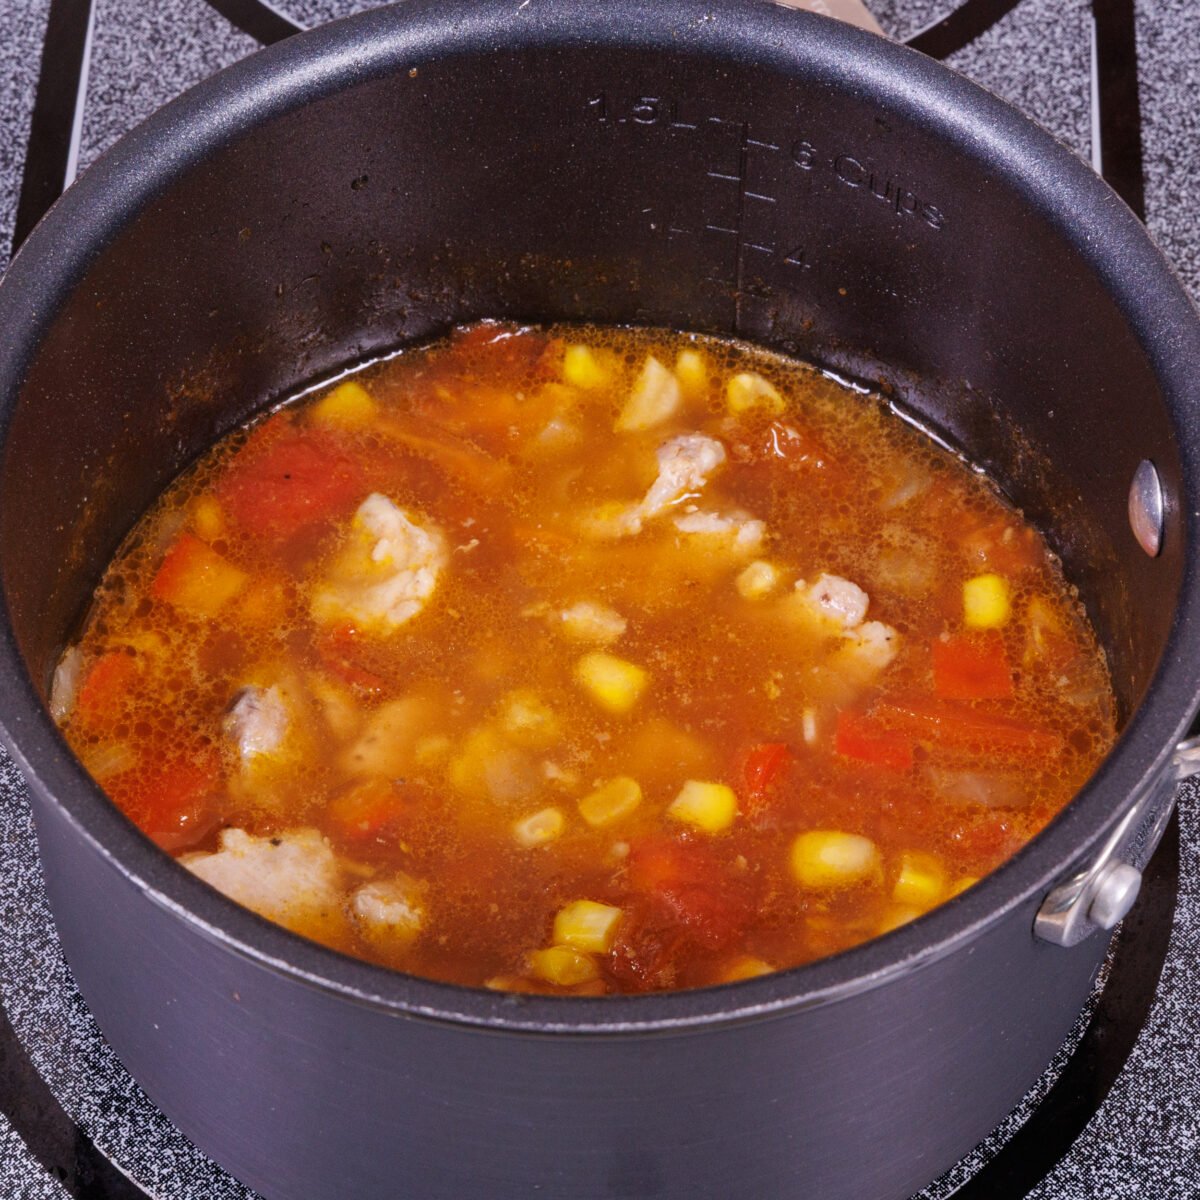 chicken tortilla soup in a small black pot.